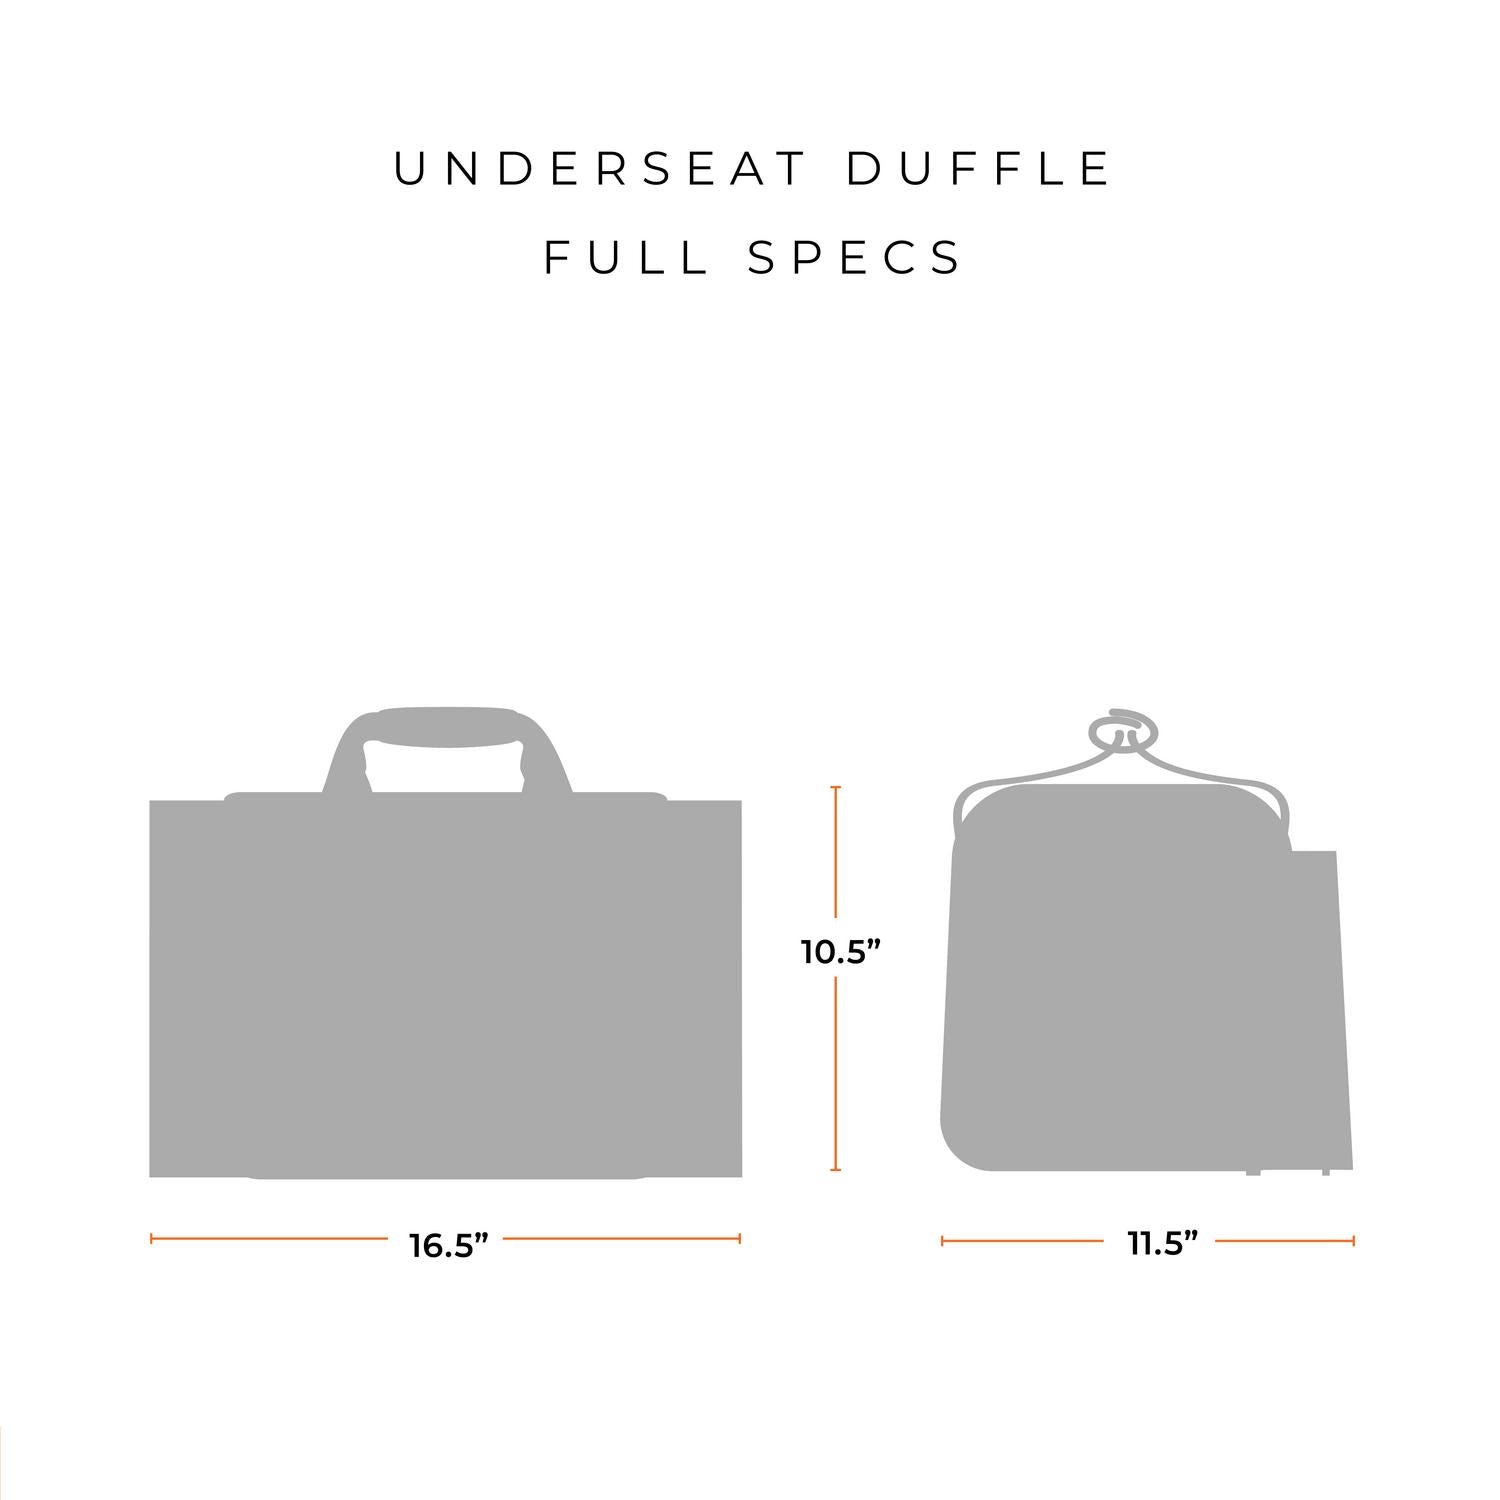 Underseat Duffle Full Specs 16.5" x 10.5" x x11.5" #color_navy